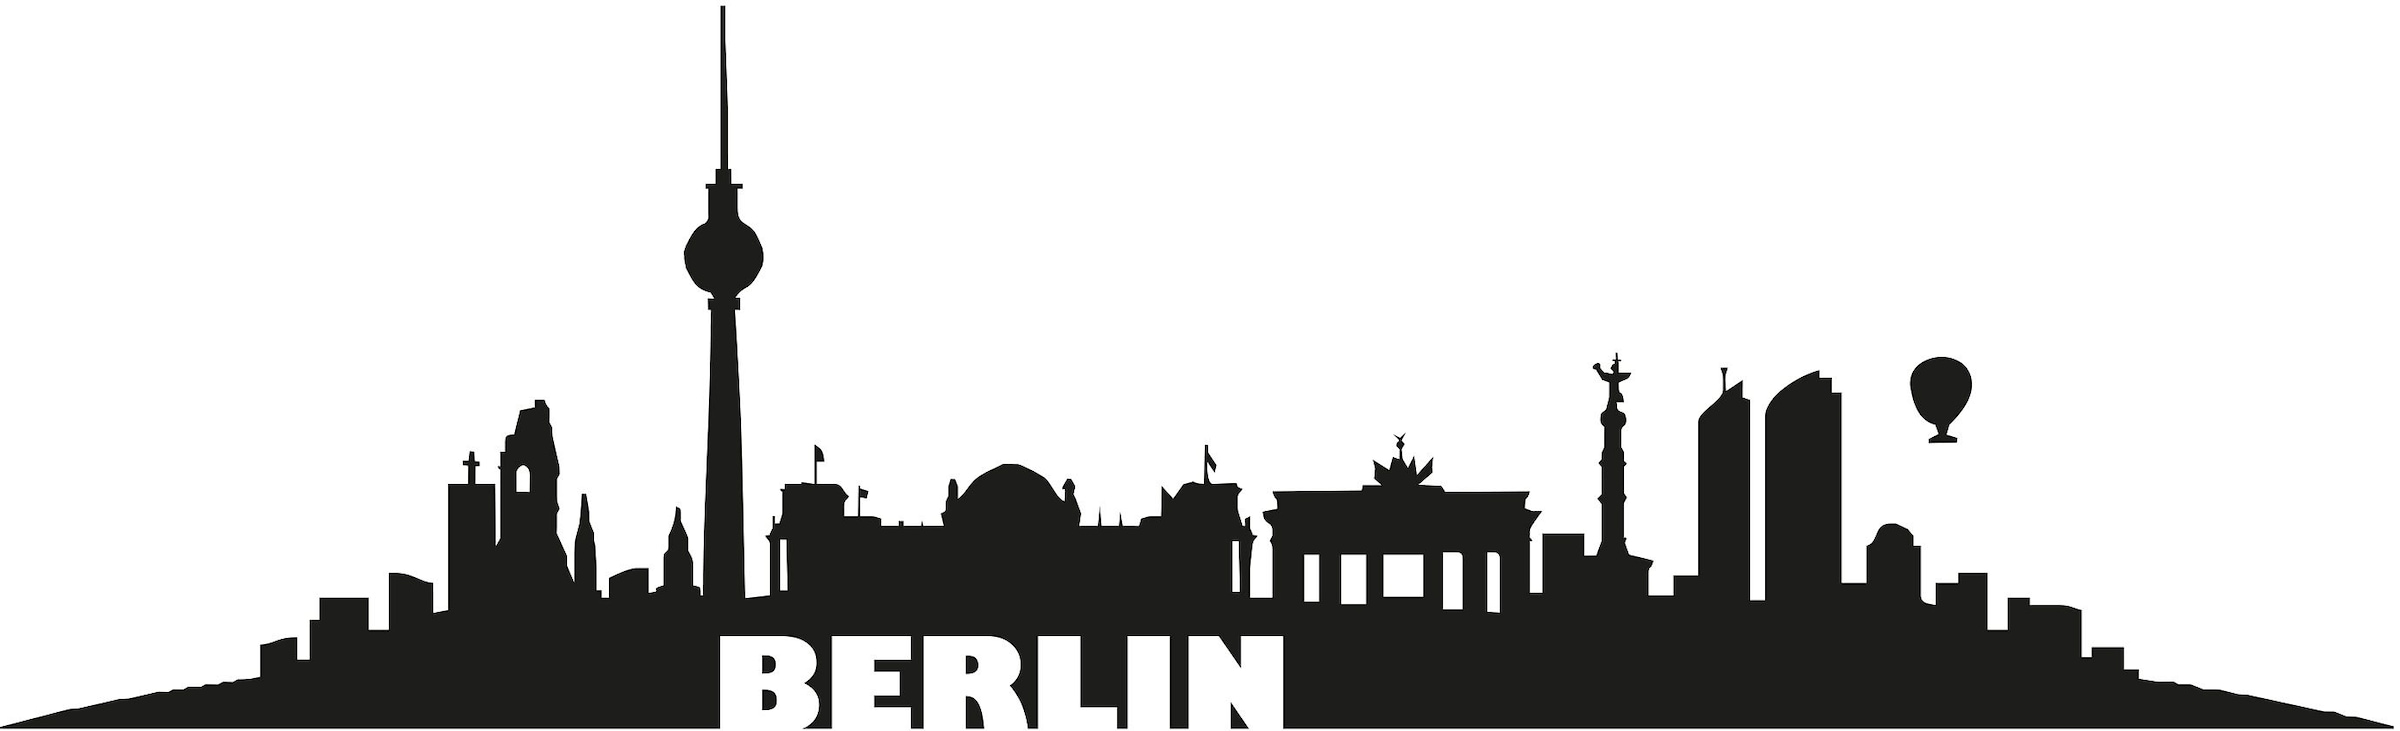 Wandtattoo »Berlin Skyline«, selbstklebend, entfernbar